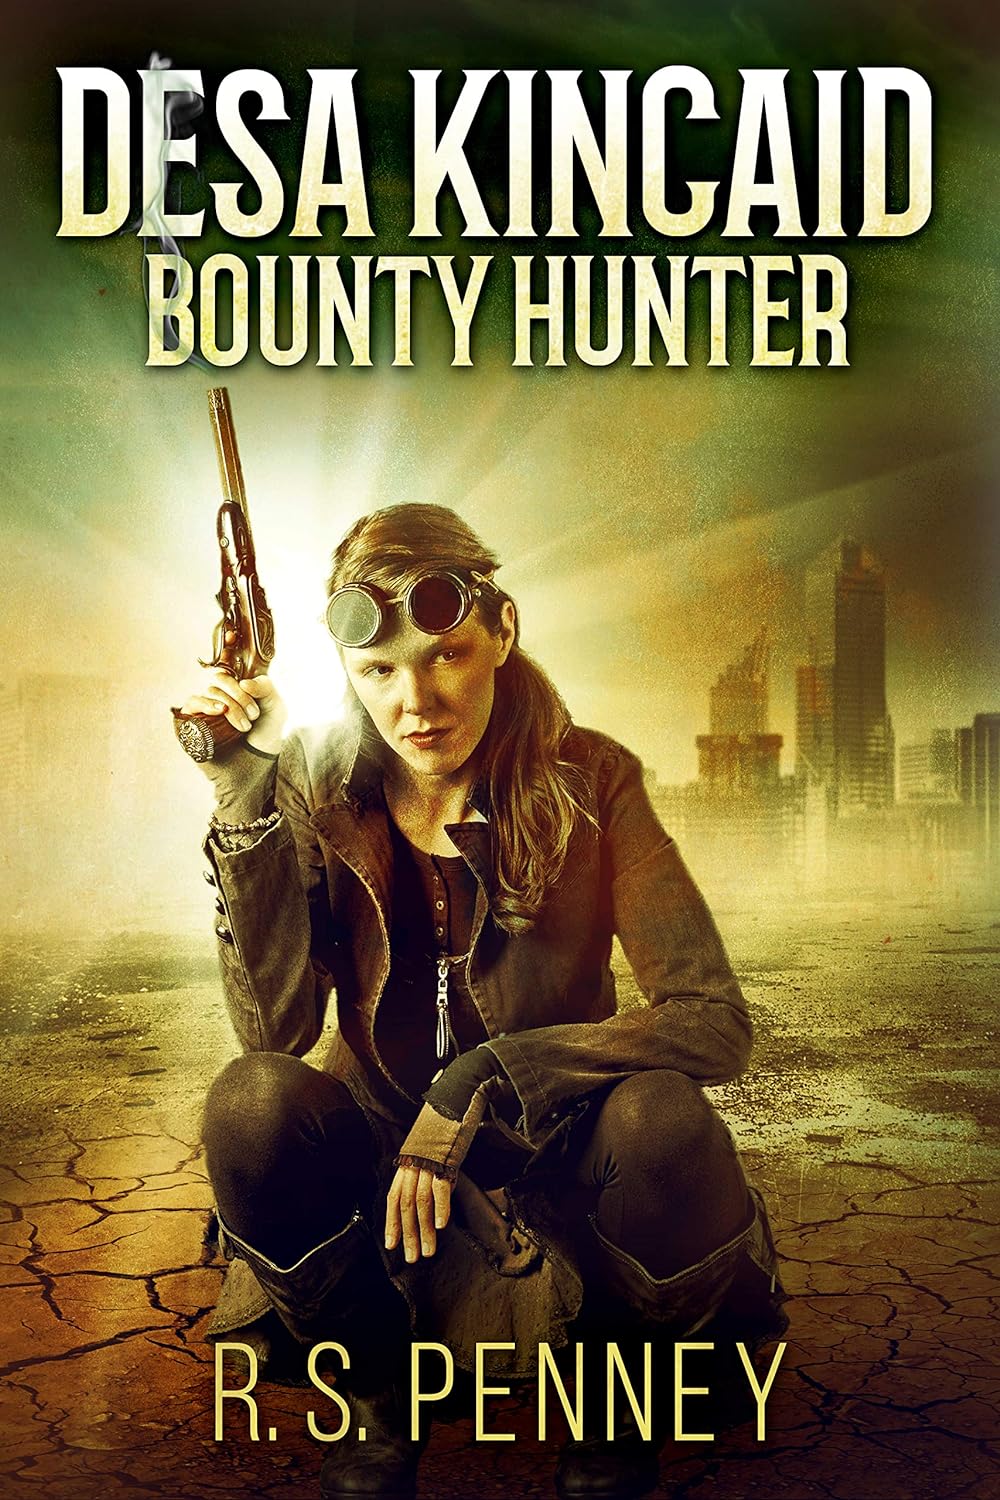 Desa Kincaid - Bounty Hunter Book 1 is free on Amazon Kindle